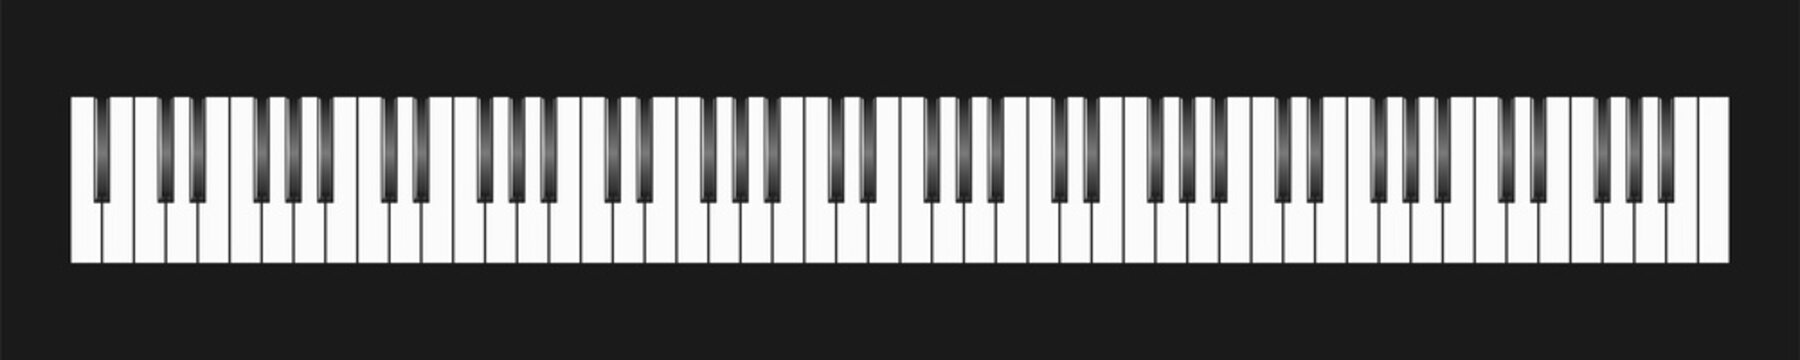 Klavier Tastatur Vektor Grafik